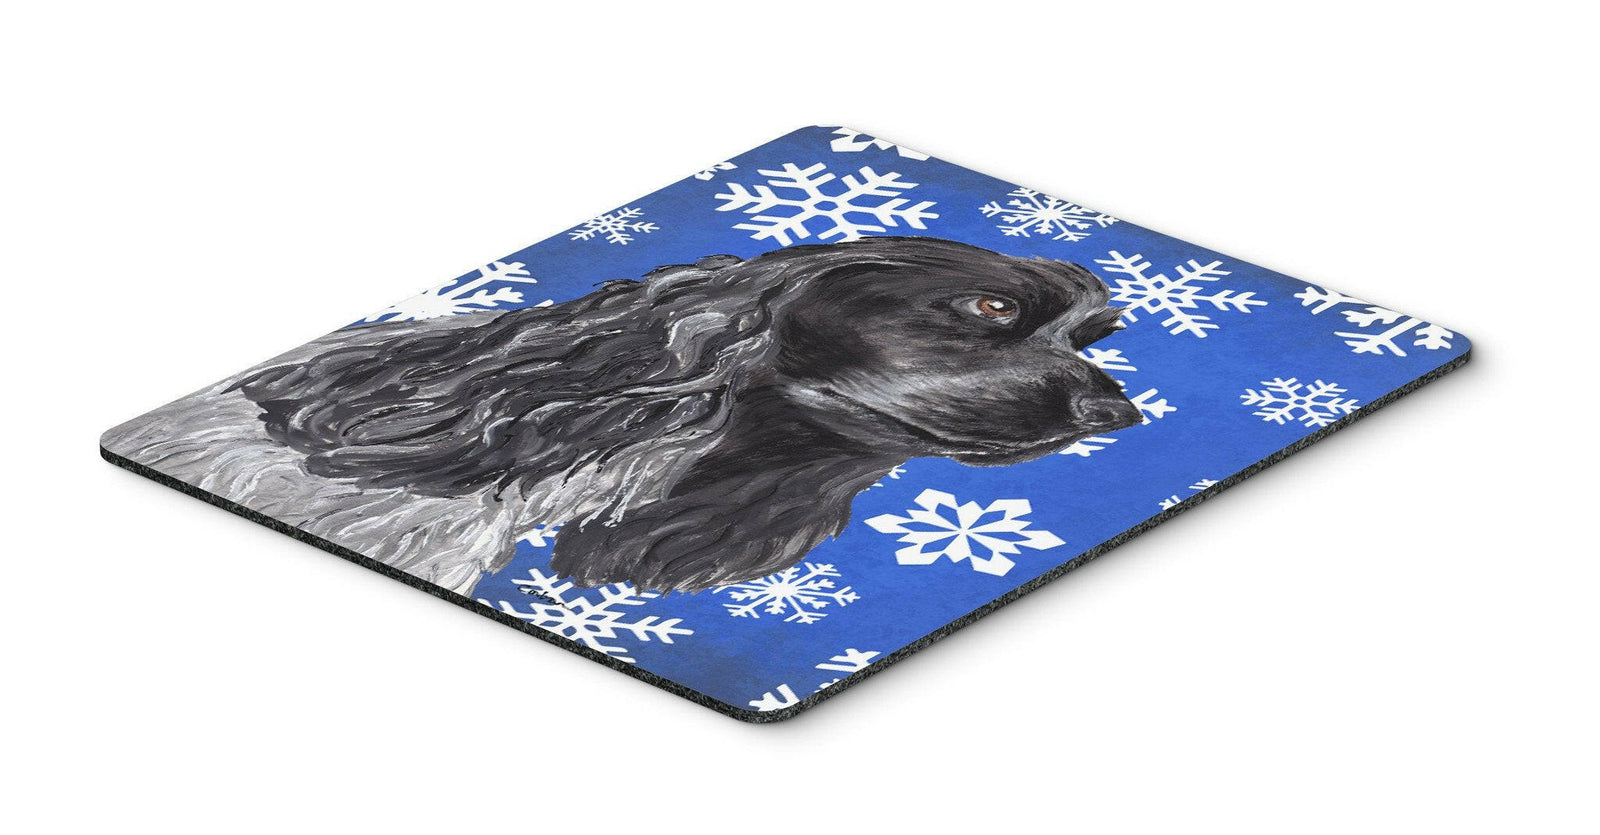 Cocker Spaniel Blue Snowflake Winter Mouse Pad, Hot Pad or Trivet by Caroline's Treasures